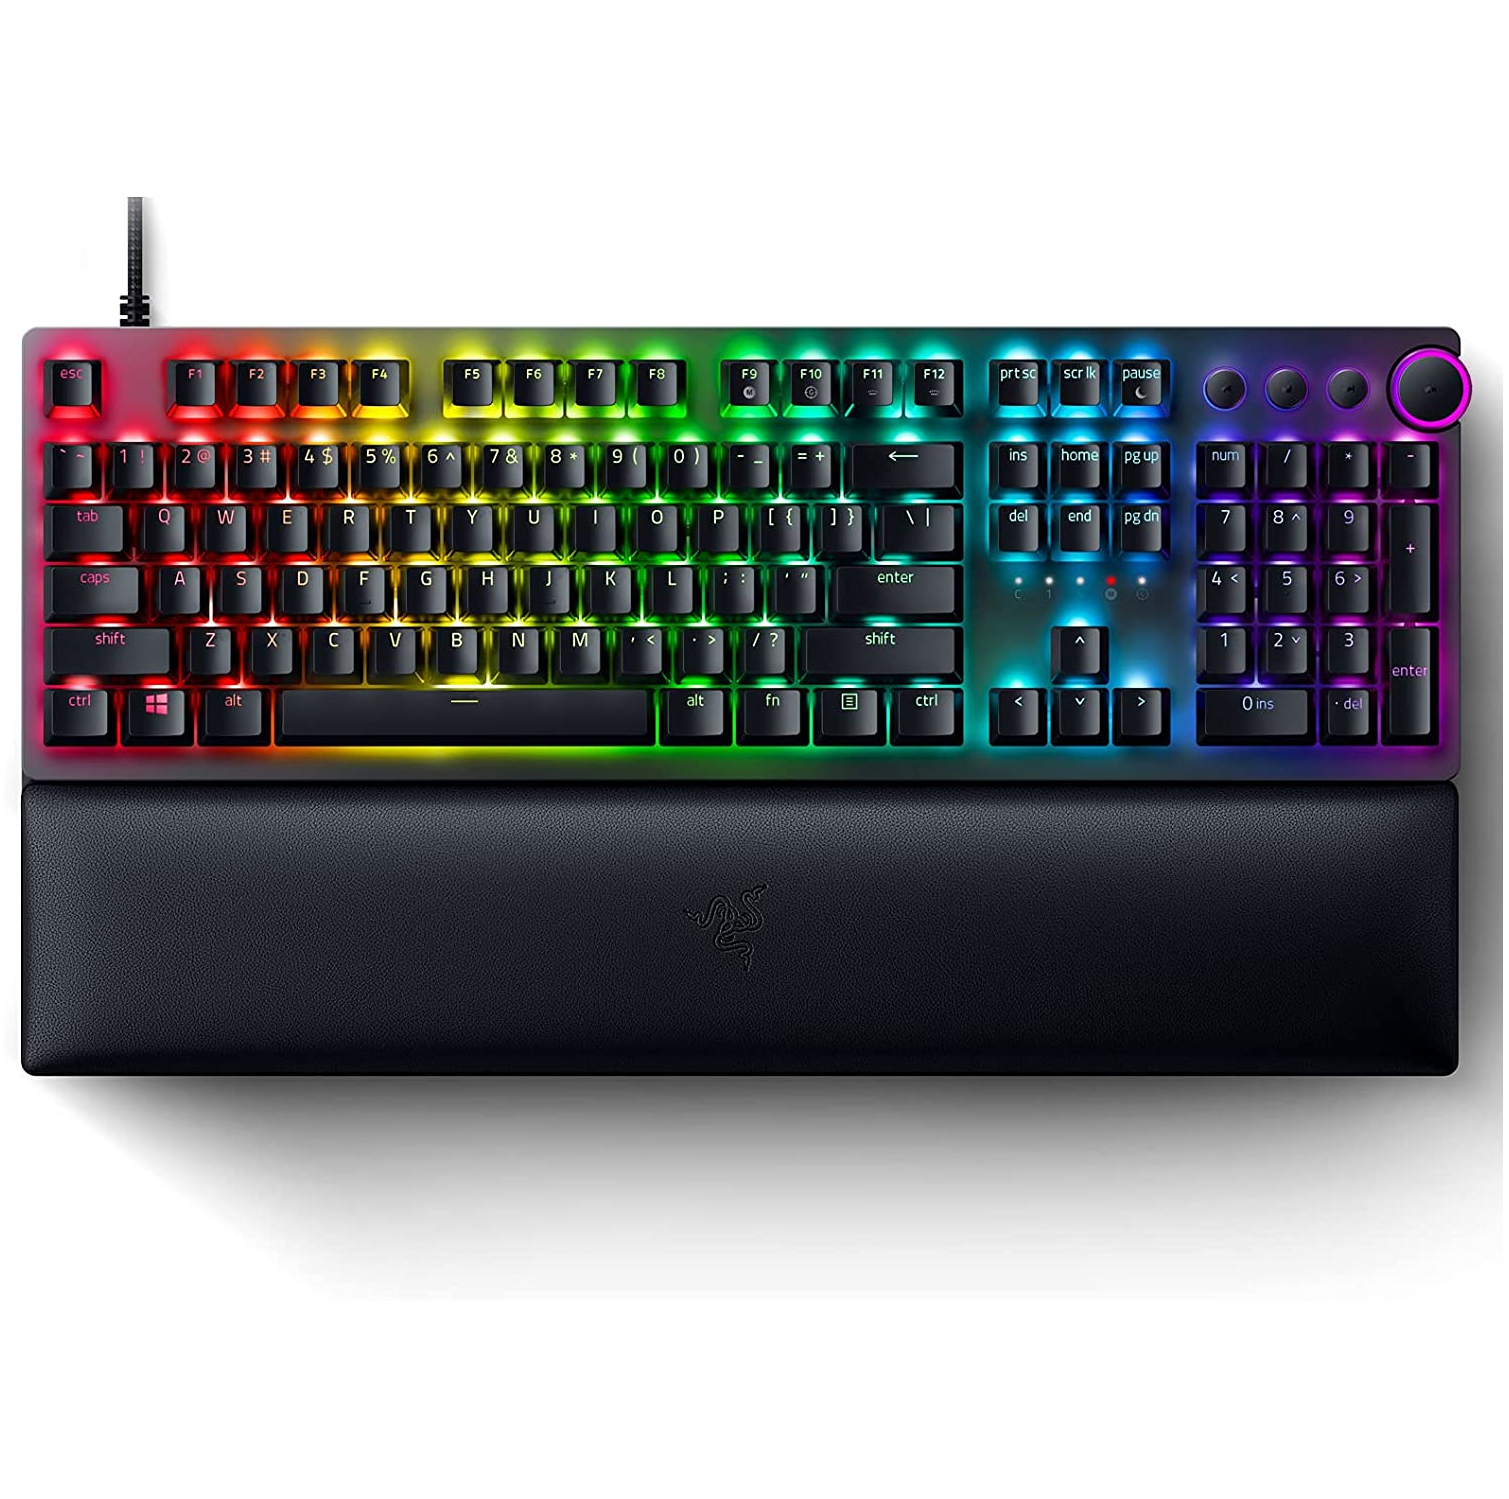 Razer Huntsman V2 optical gaming keyboard with rainbow lighting against a white background.